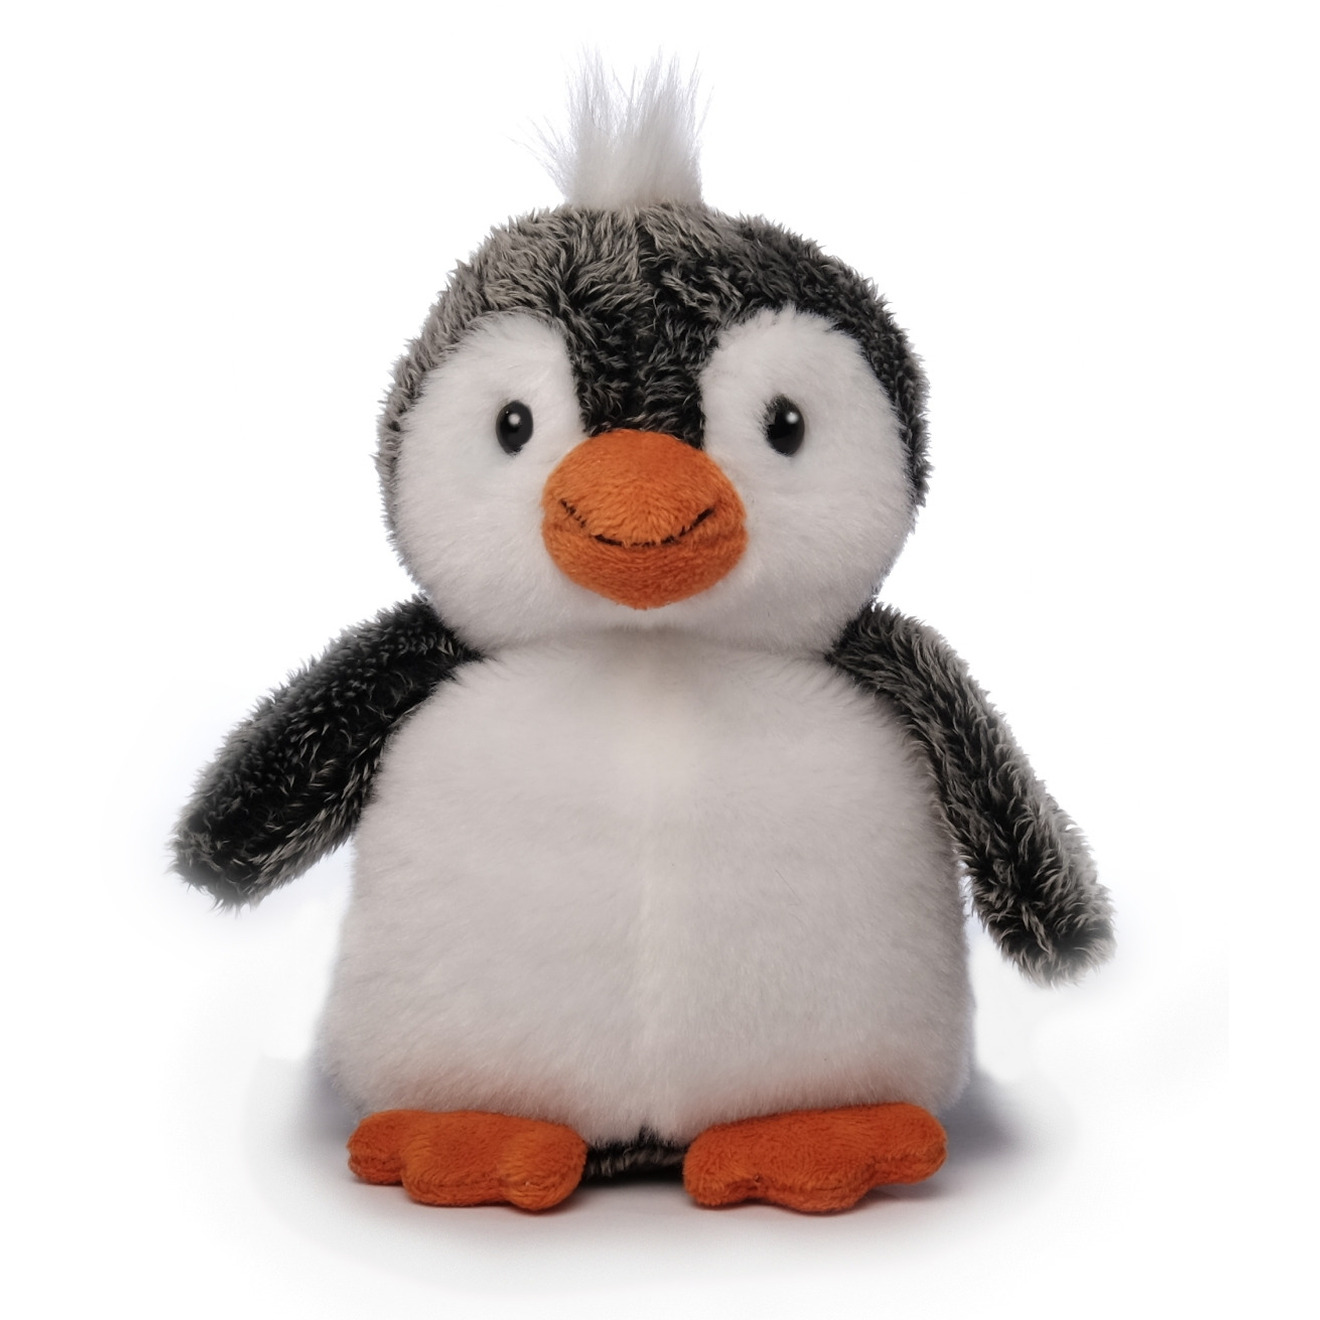 Inware pluche pinguin knuffeldier grijs-wit staand 16 cm